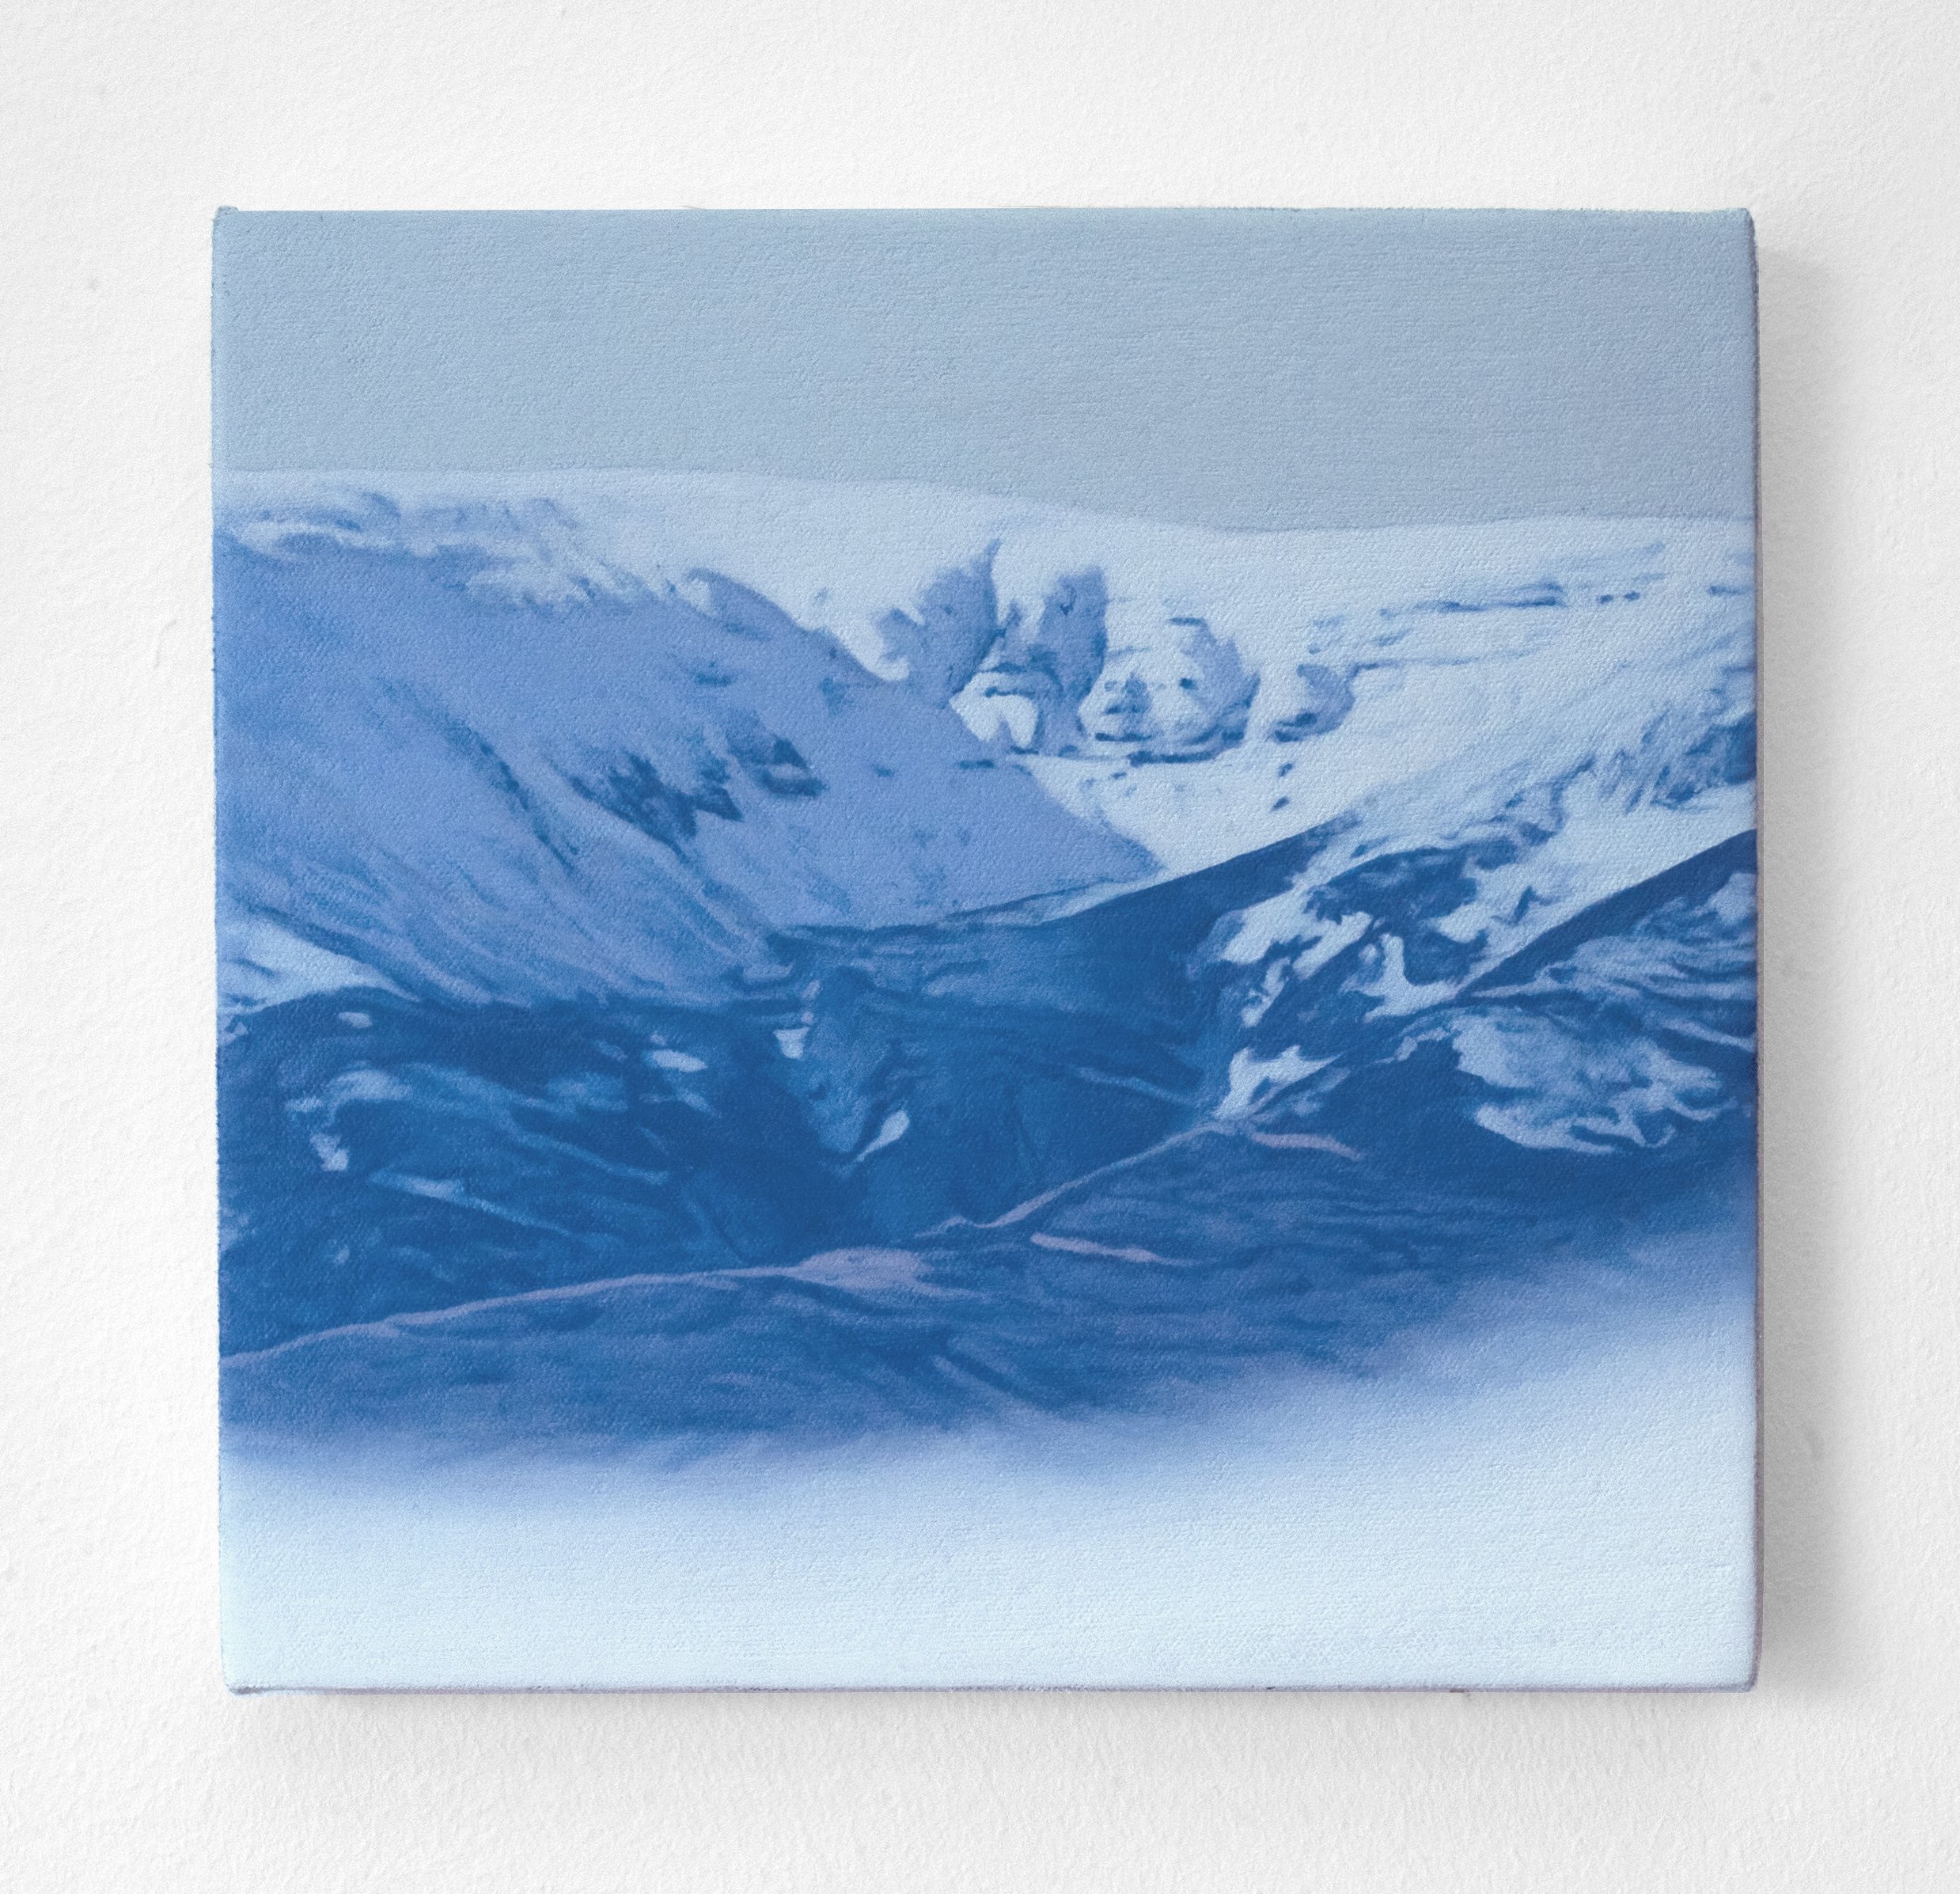  ‘Mountain in Borja, Spain’, oil on canvas, 20 x 20cm, 2022 